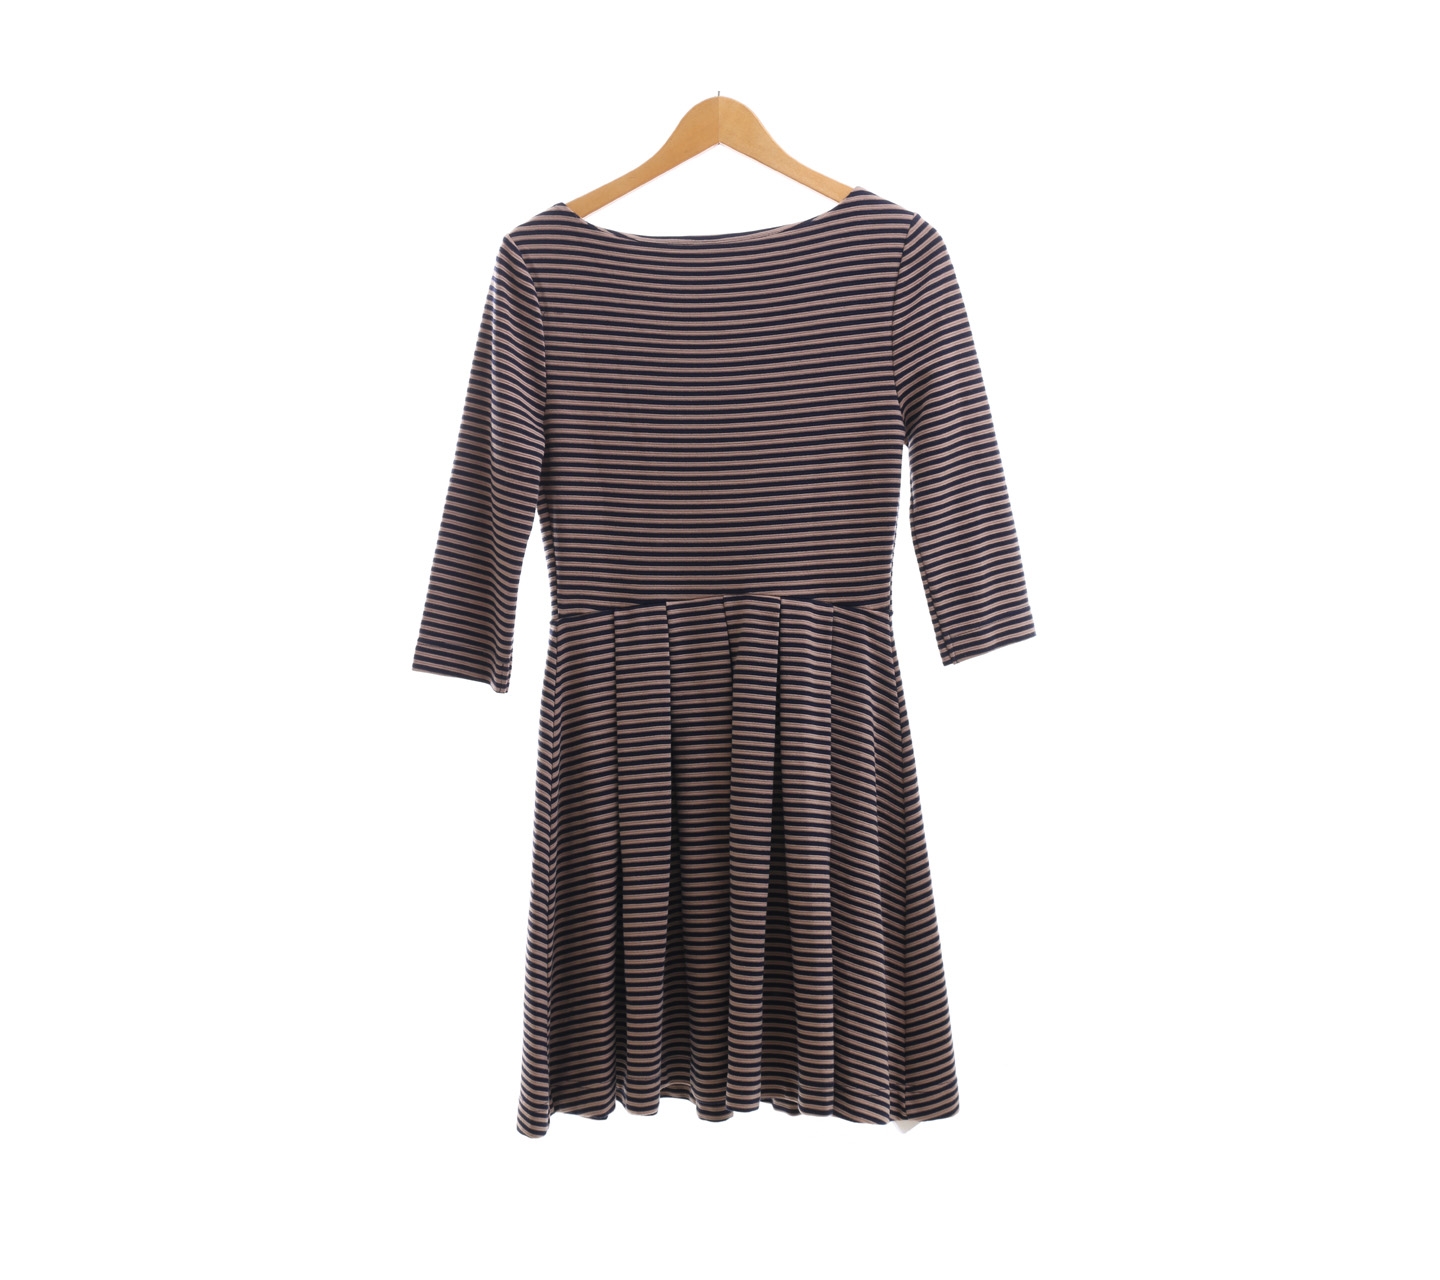 Portmons Black & Brown Striped Mini Dress